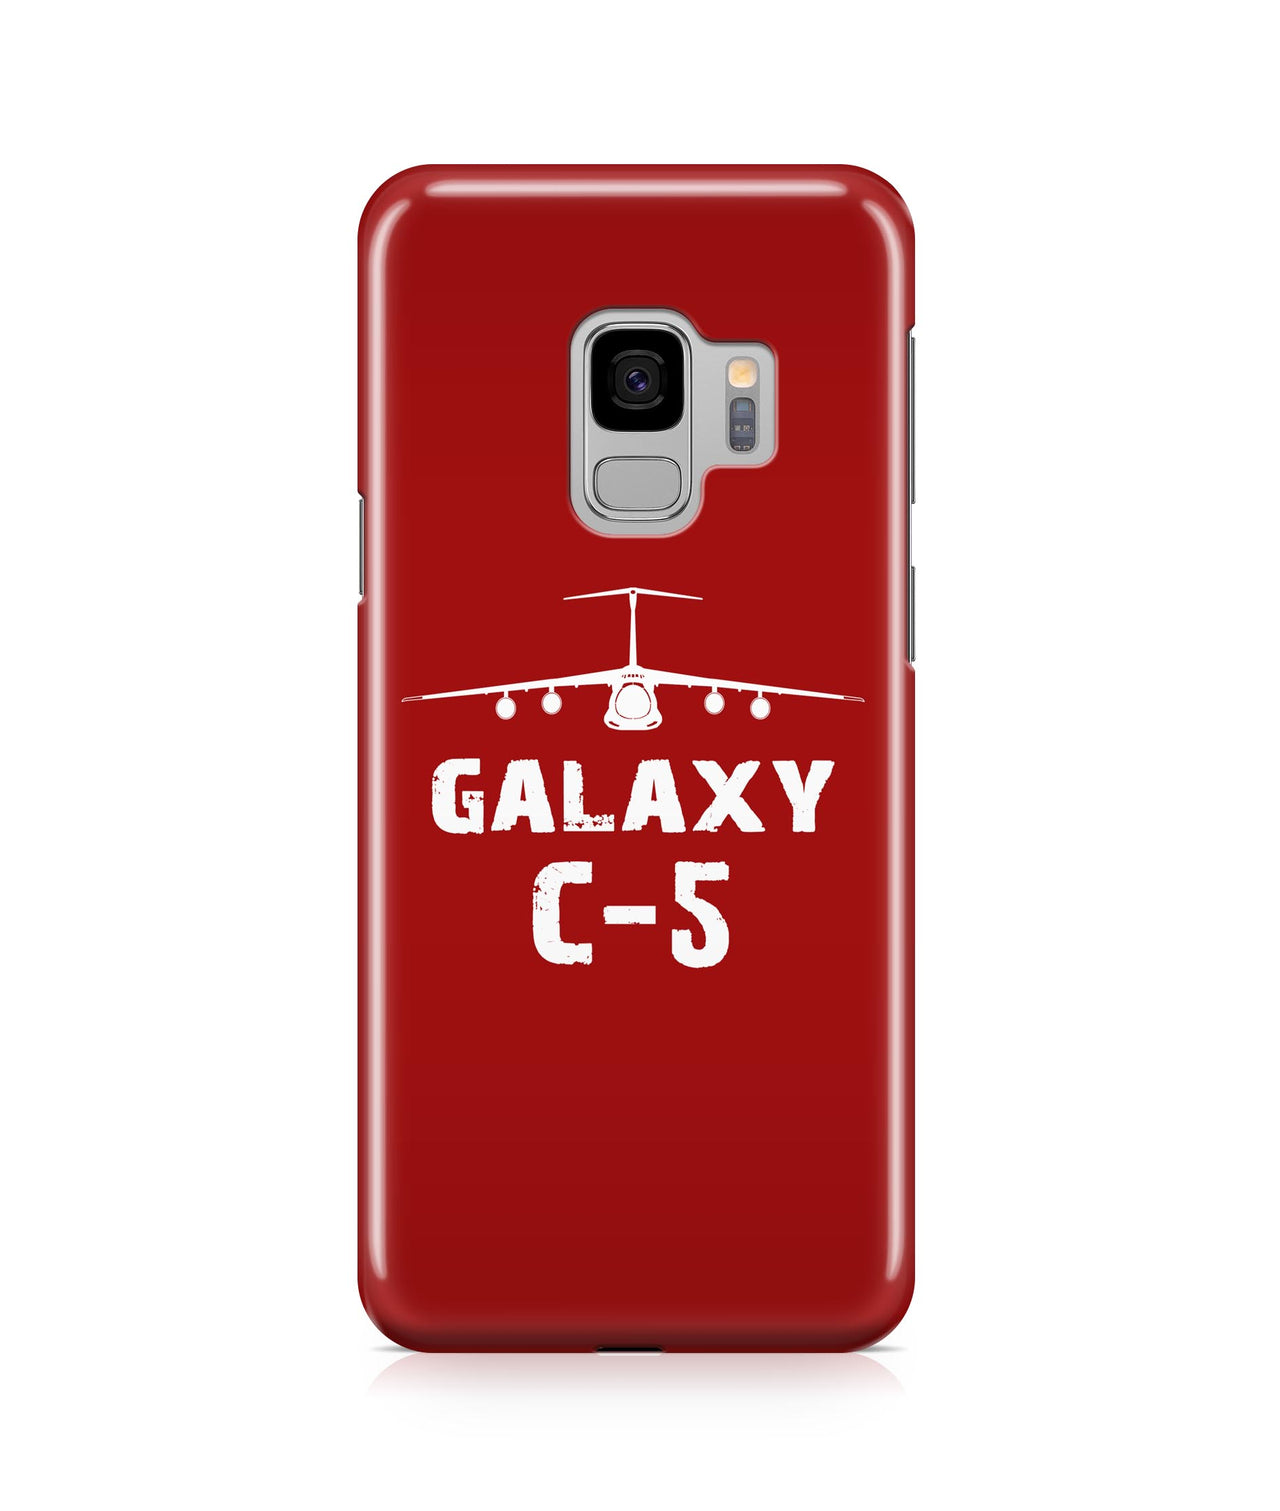 Lockheed Galaxy C-5 Plane & Designed Samsung J Cases